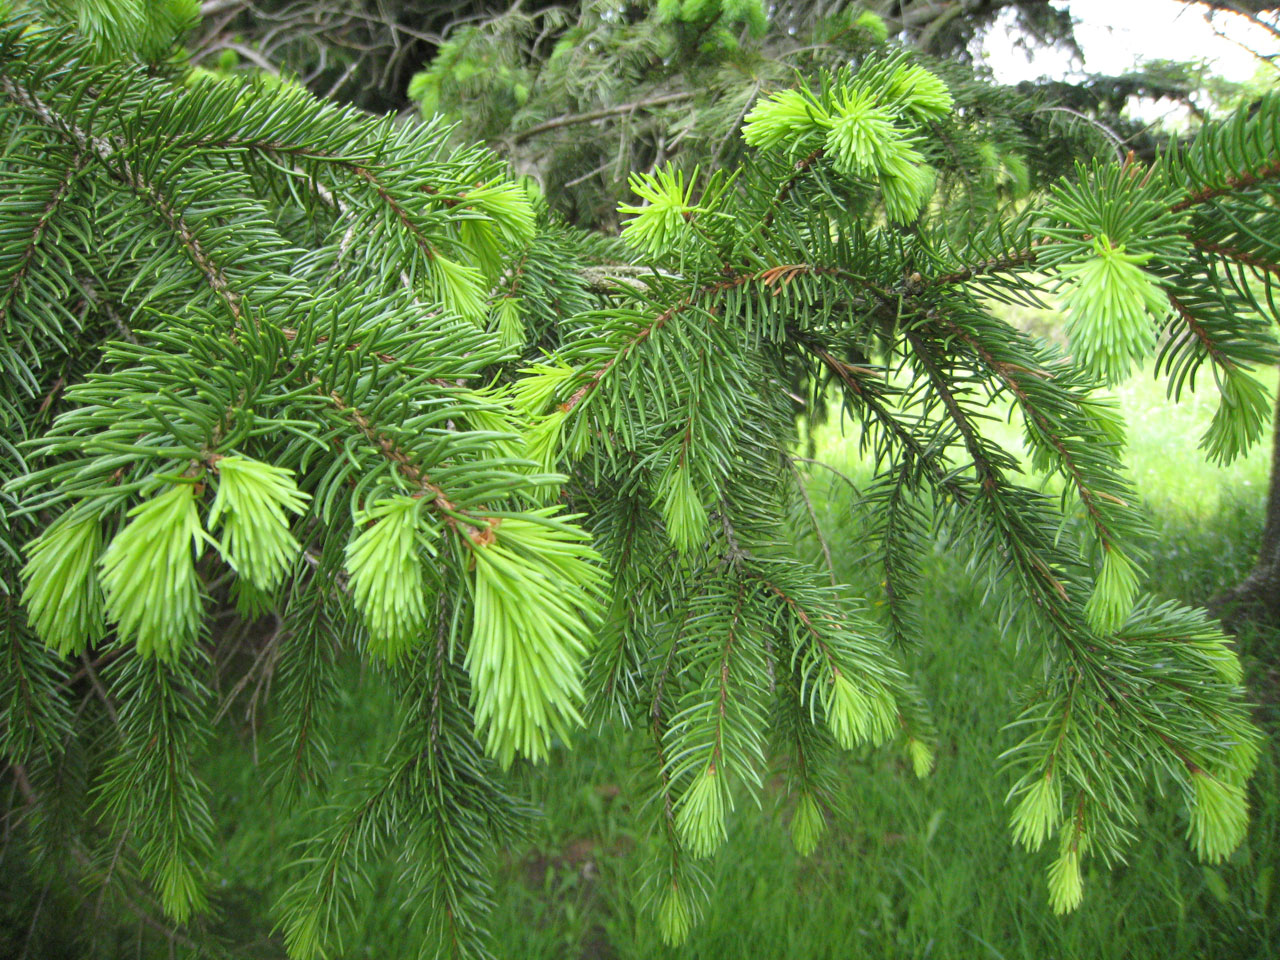 New Growth On Pine Tree